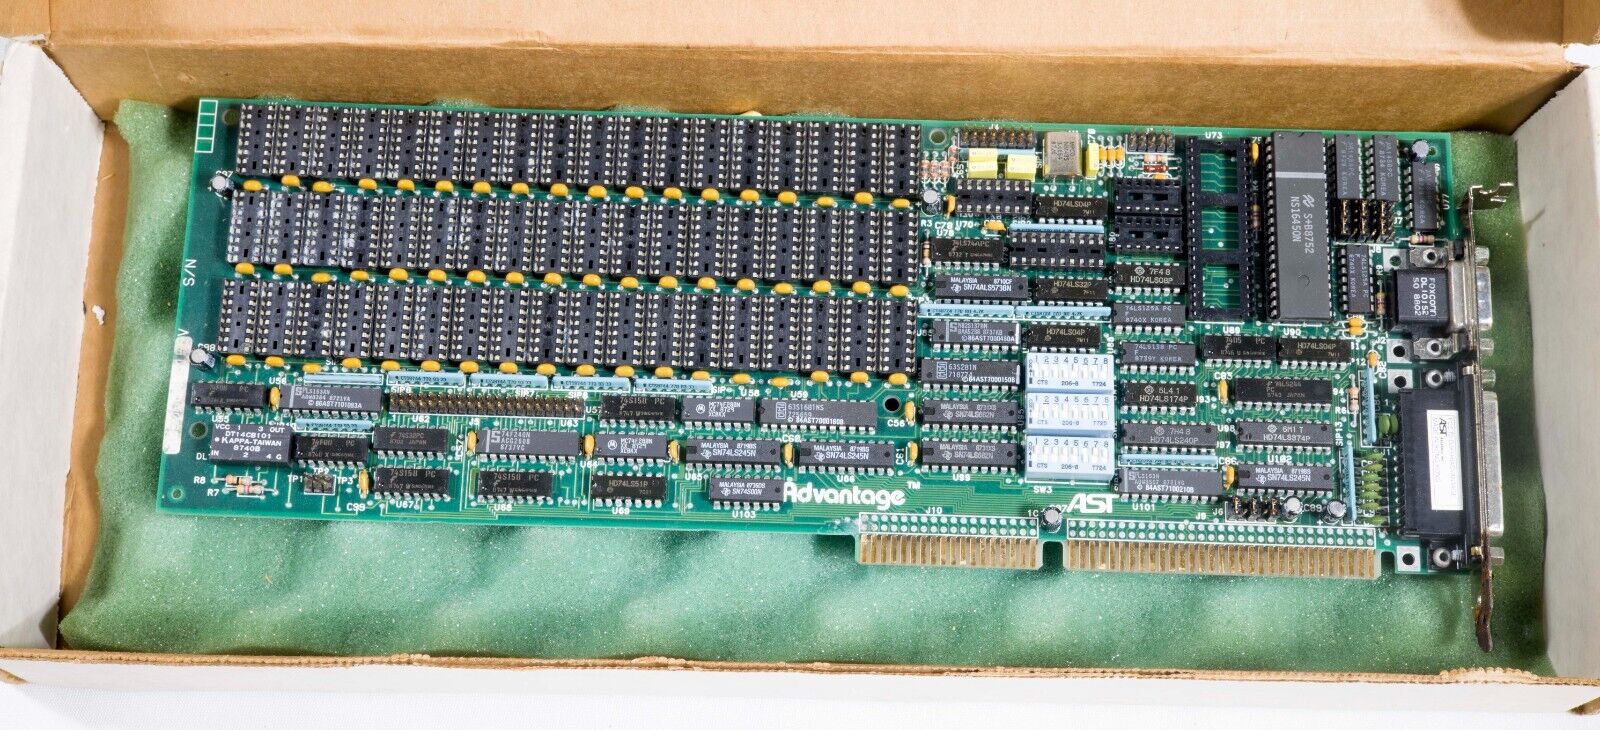 Vintage AST Advantage 16 bit memory adapter